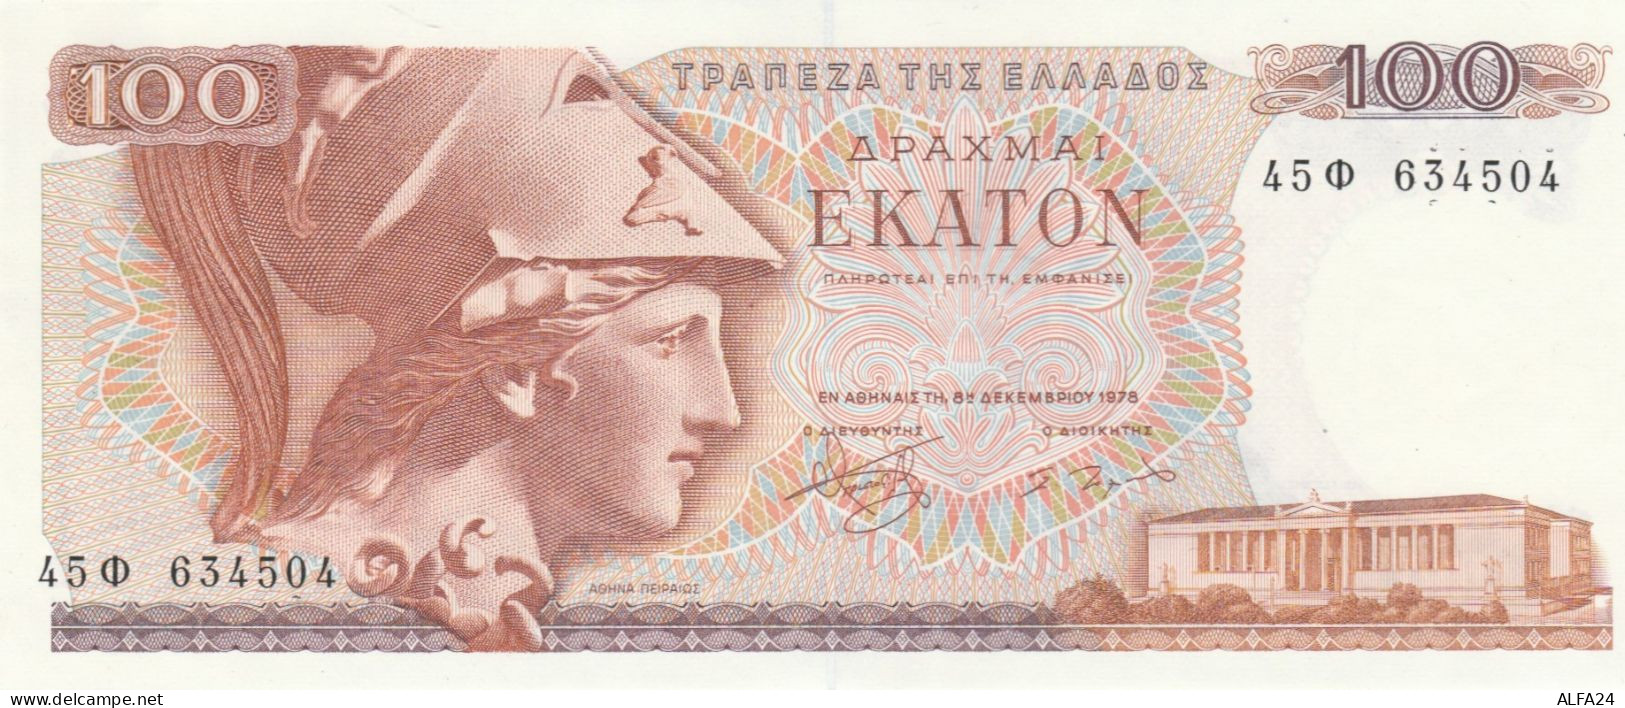 BANCONOTA GRECIA 100 UNC (RY2682 - Greece